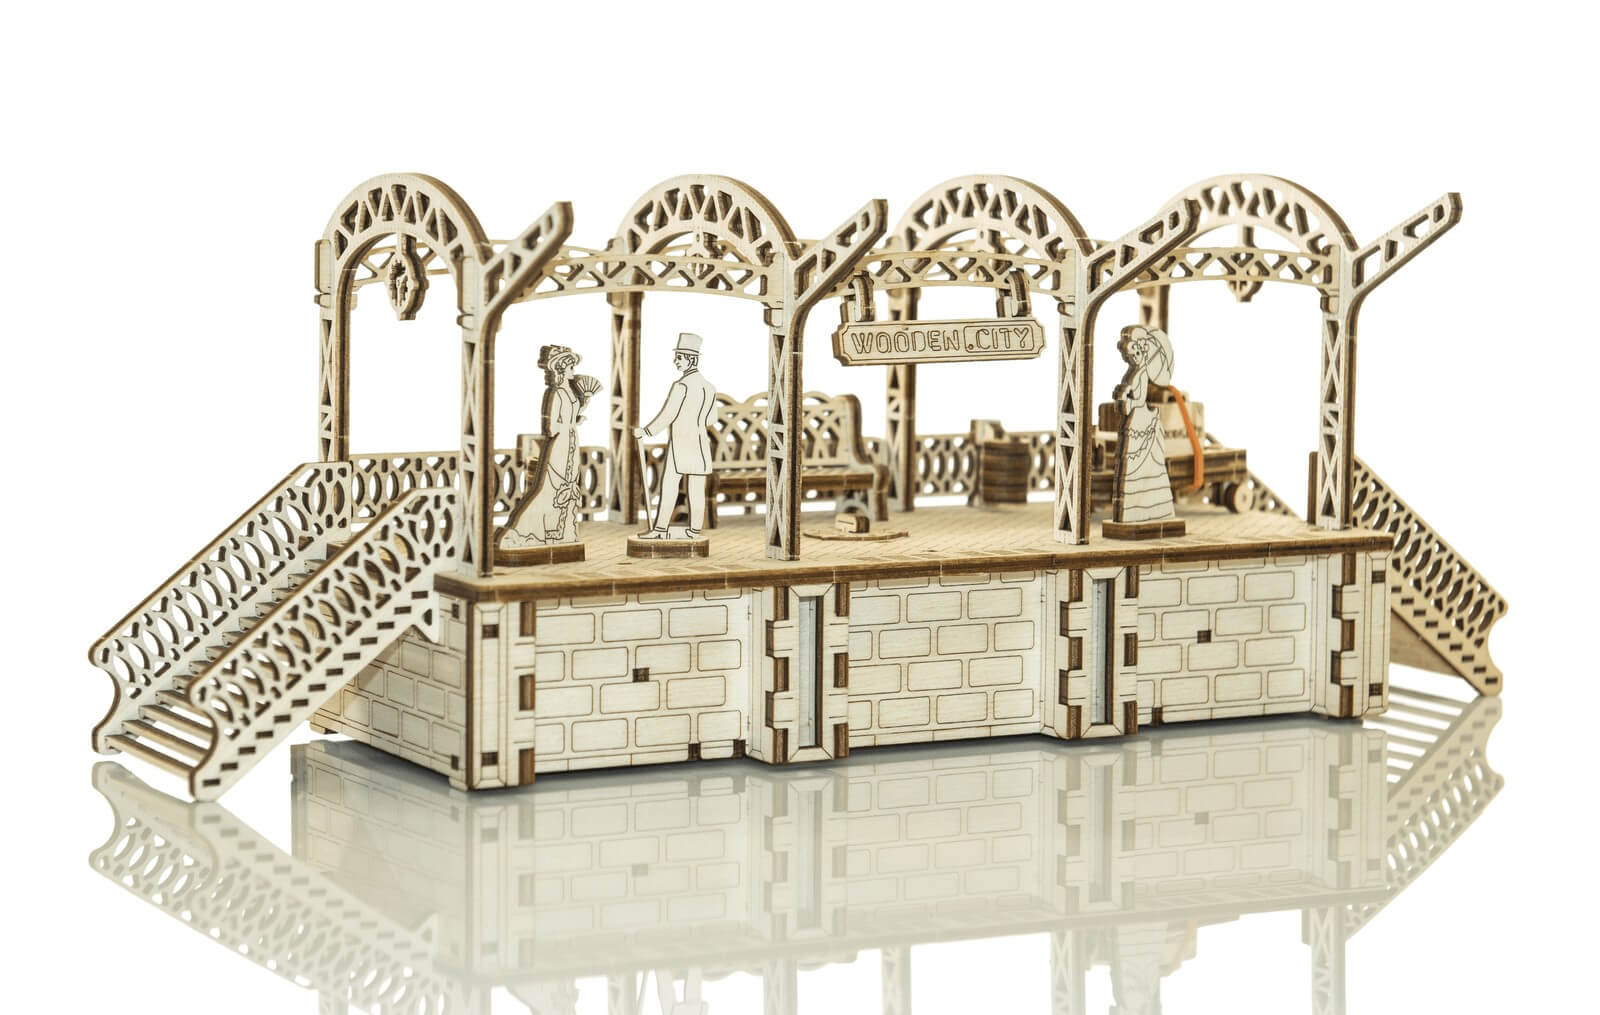 Pret mic Puzzle mecanic 3D - Statie de tren